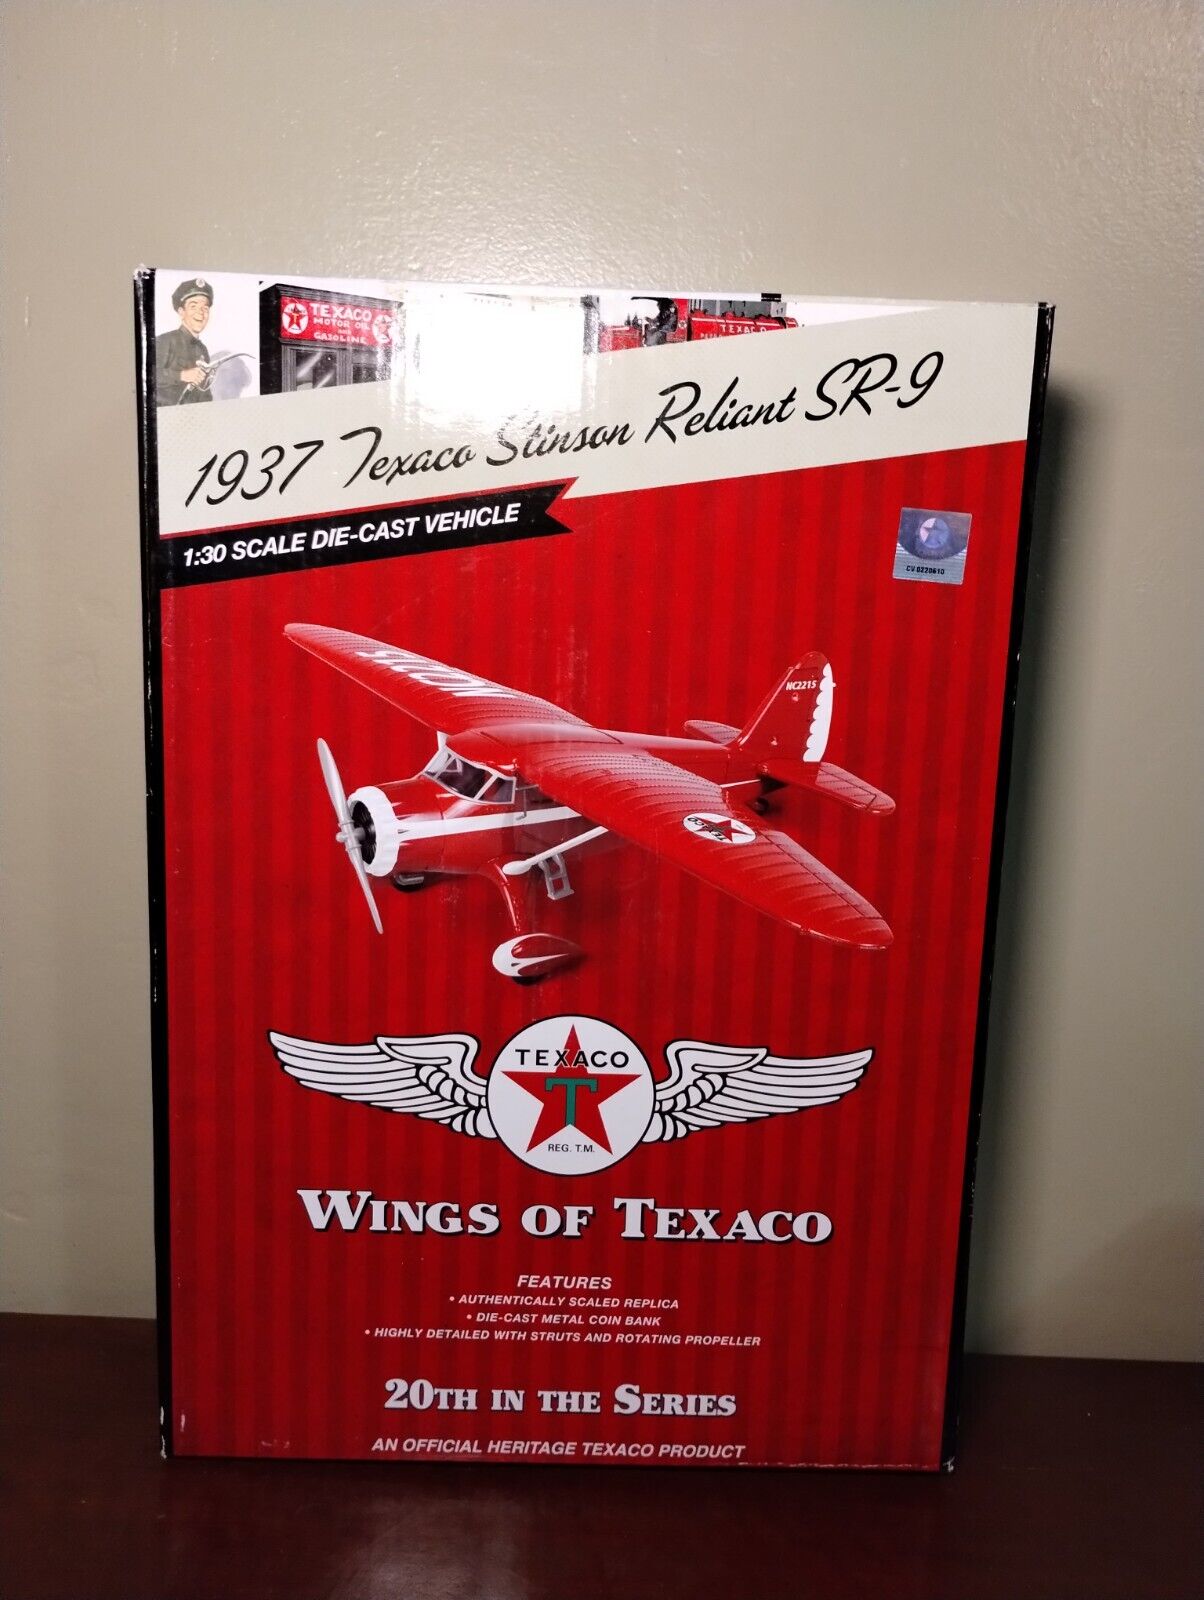 Wings Of Texaco 20th In The Series 1937 Texaco Stinson Reliant SR-9 Ertl Diecast